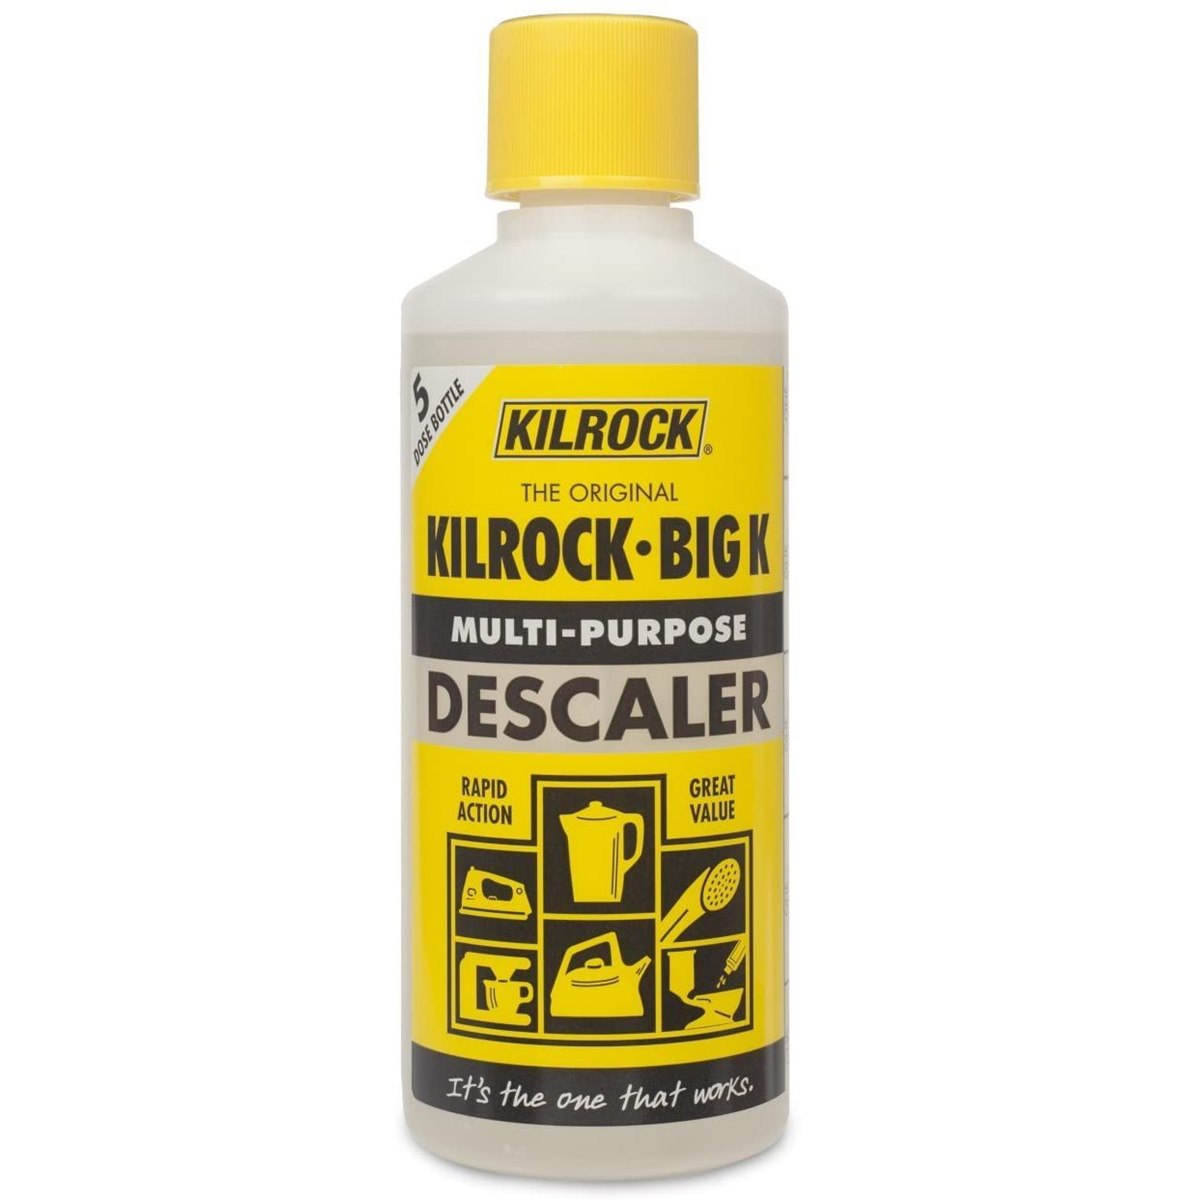 Kilrock Big K Multi Purpose Descaler 400ml